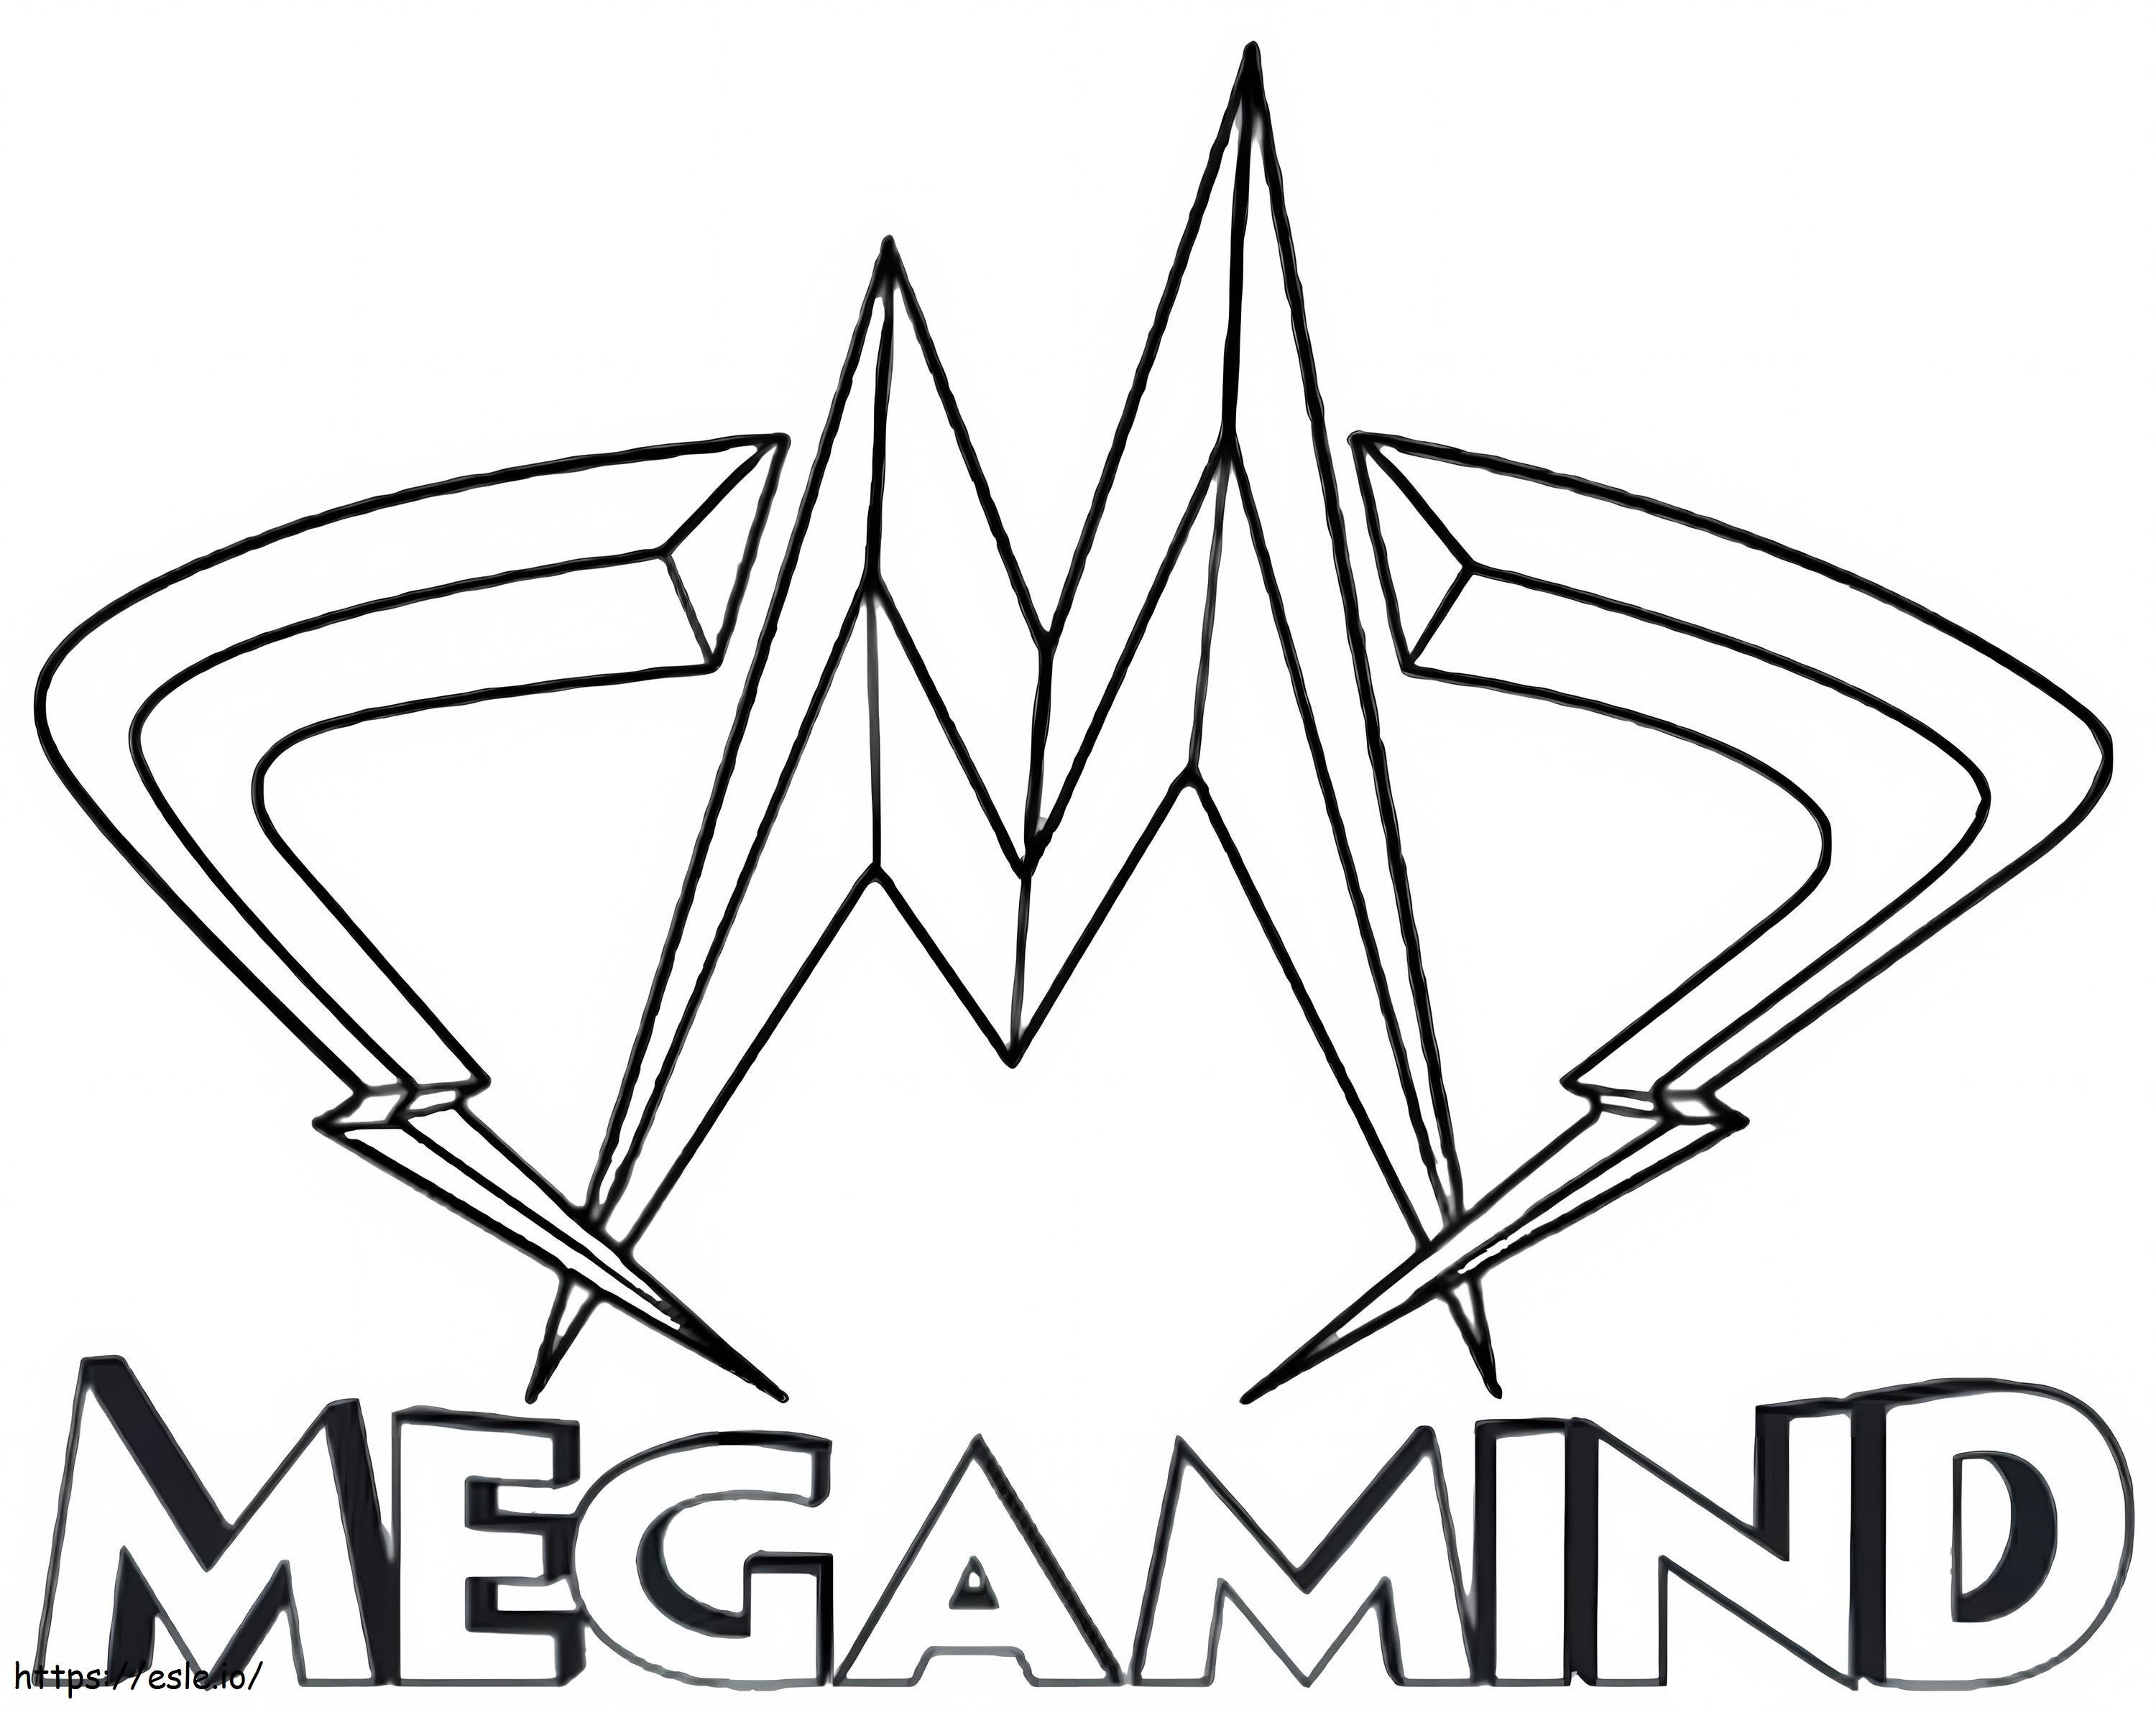 Megamind-logo kleurplaat kleurplaat